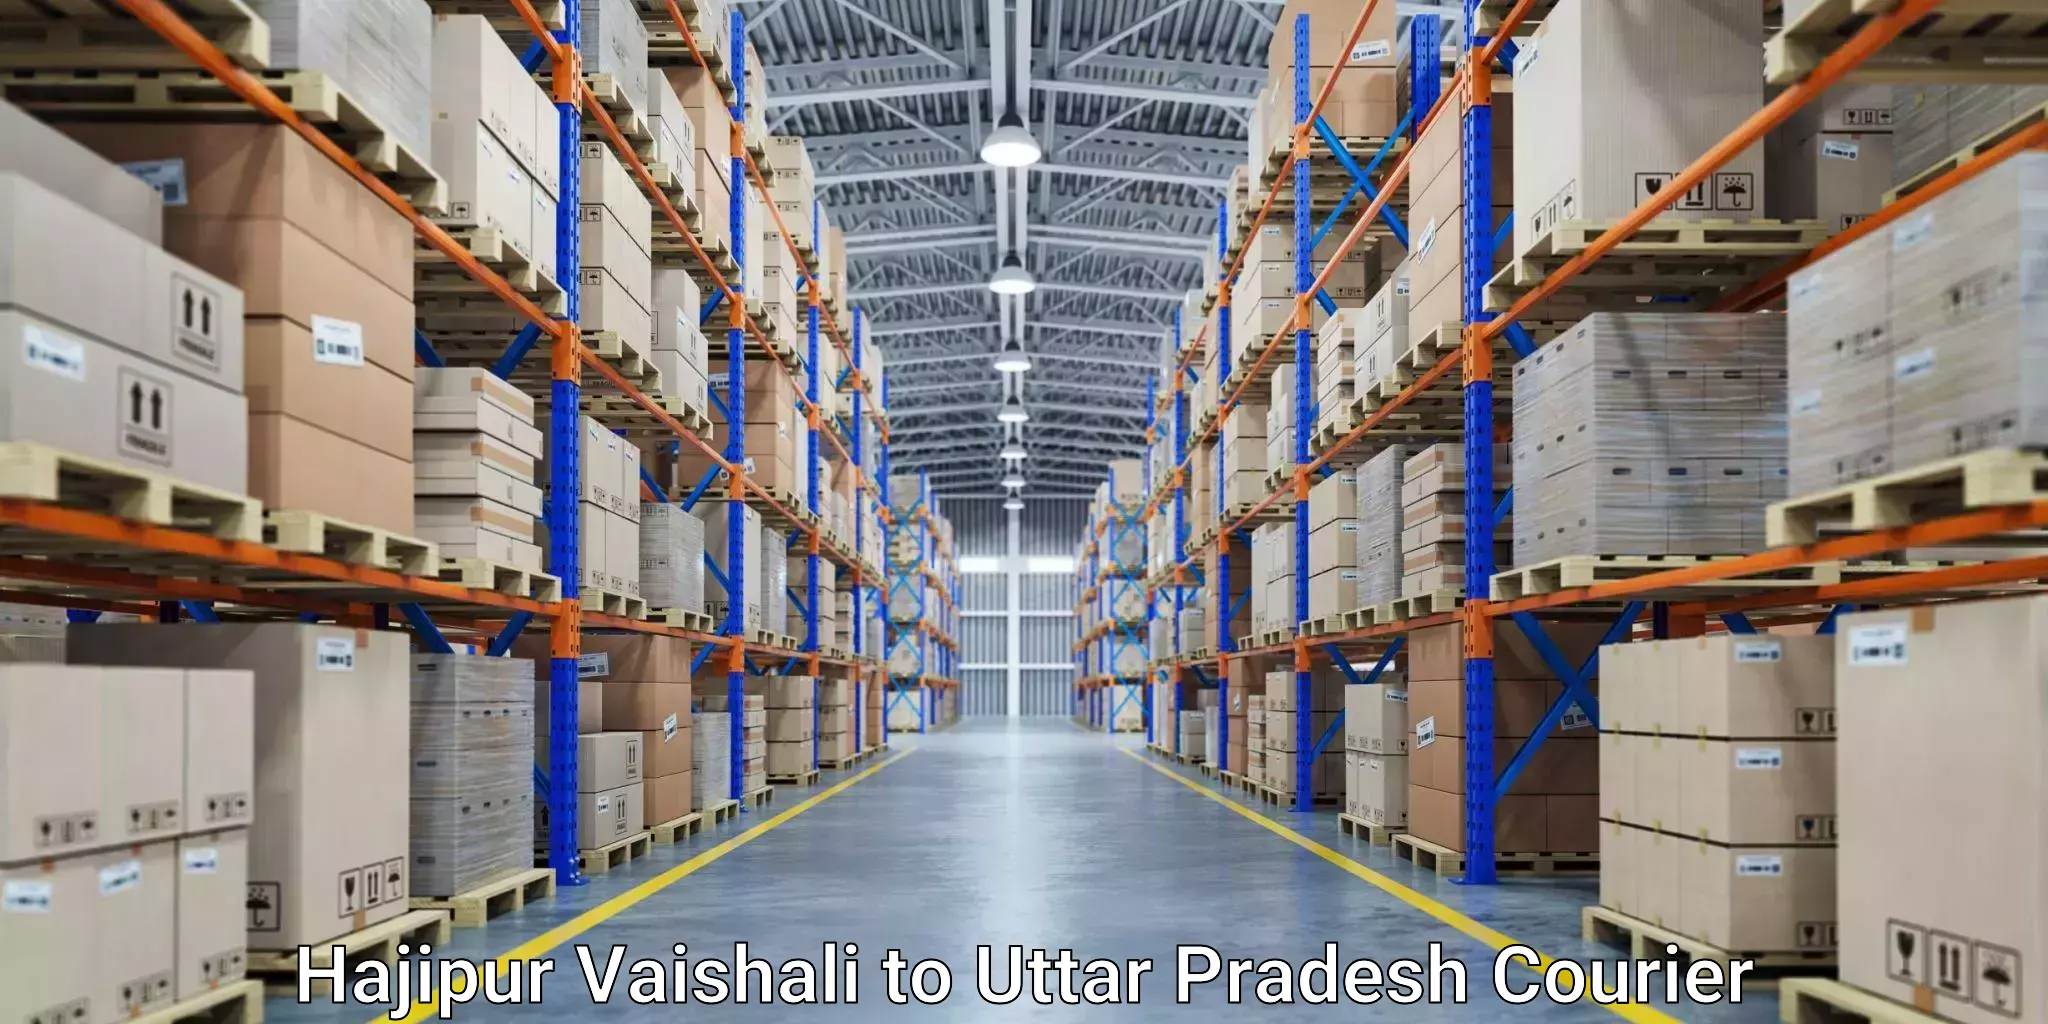 Reliable courier service Hajipur Vaishali to Banda